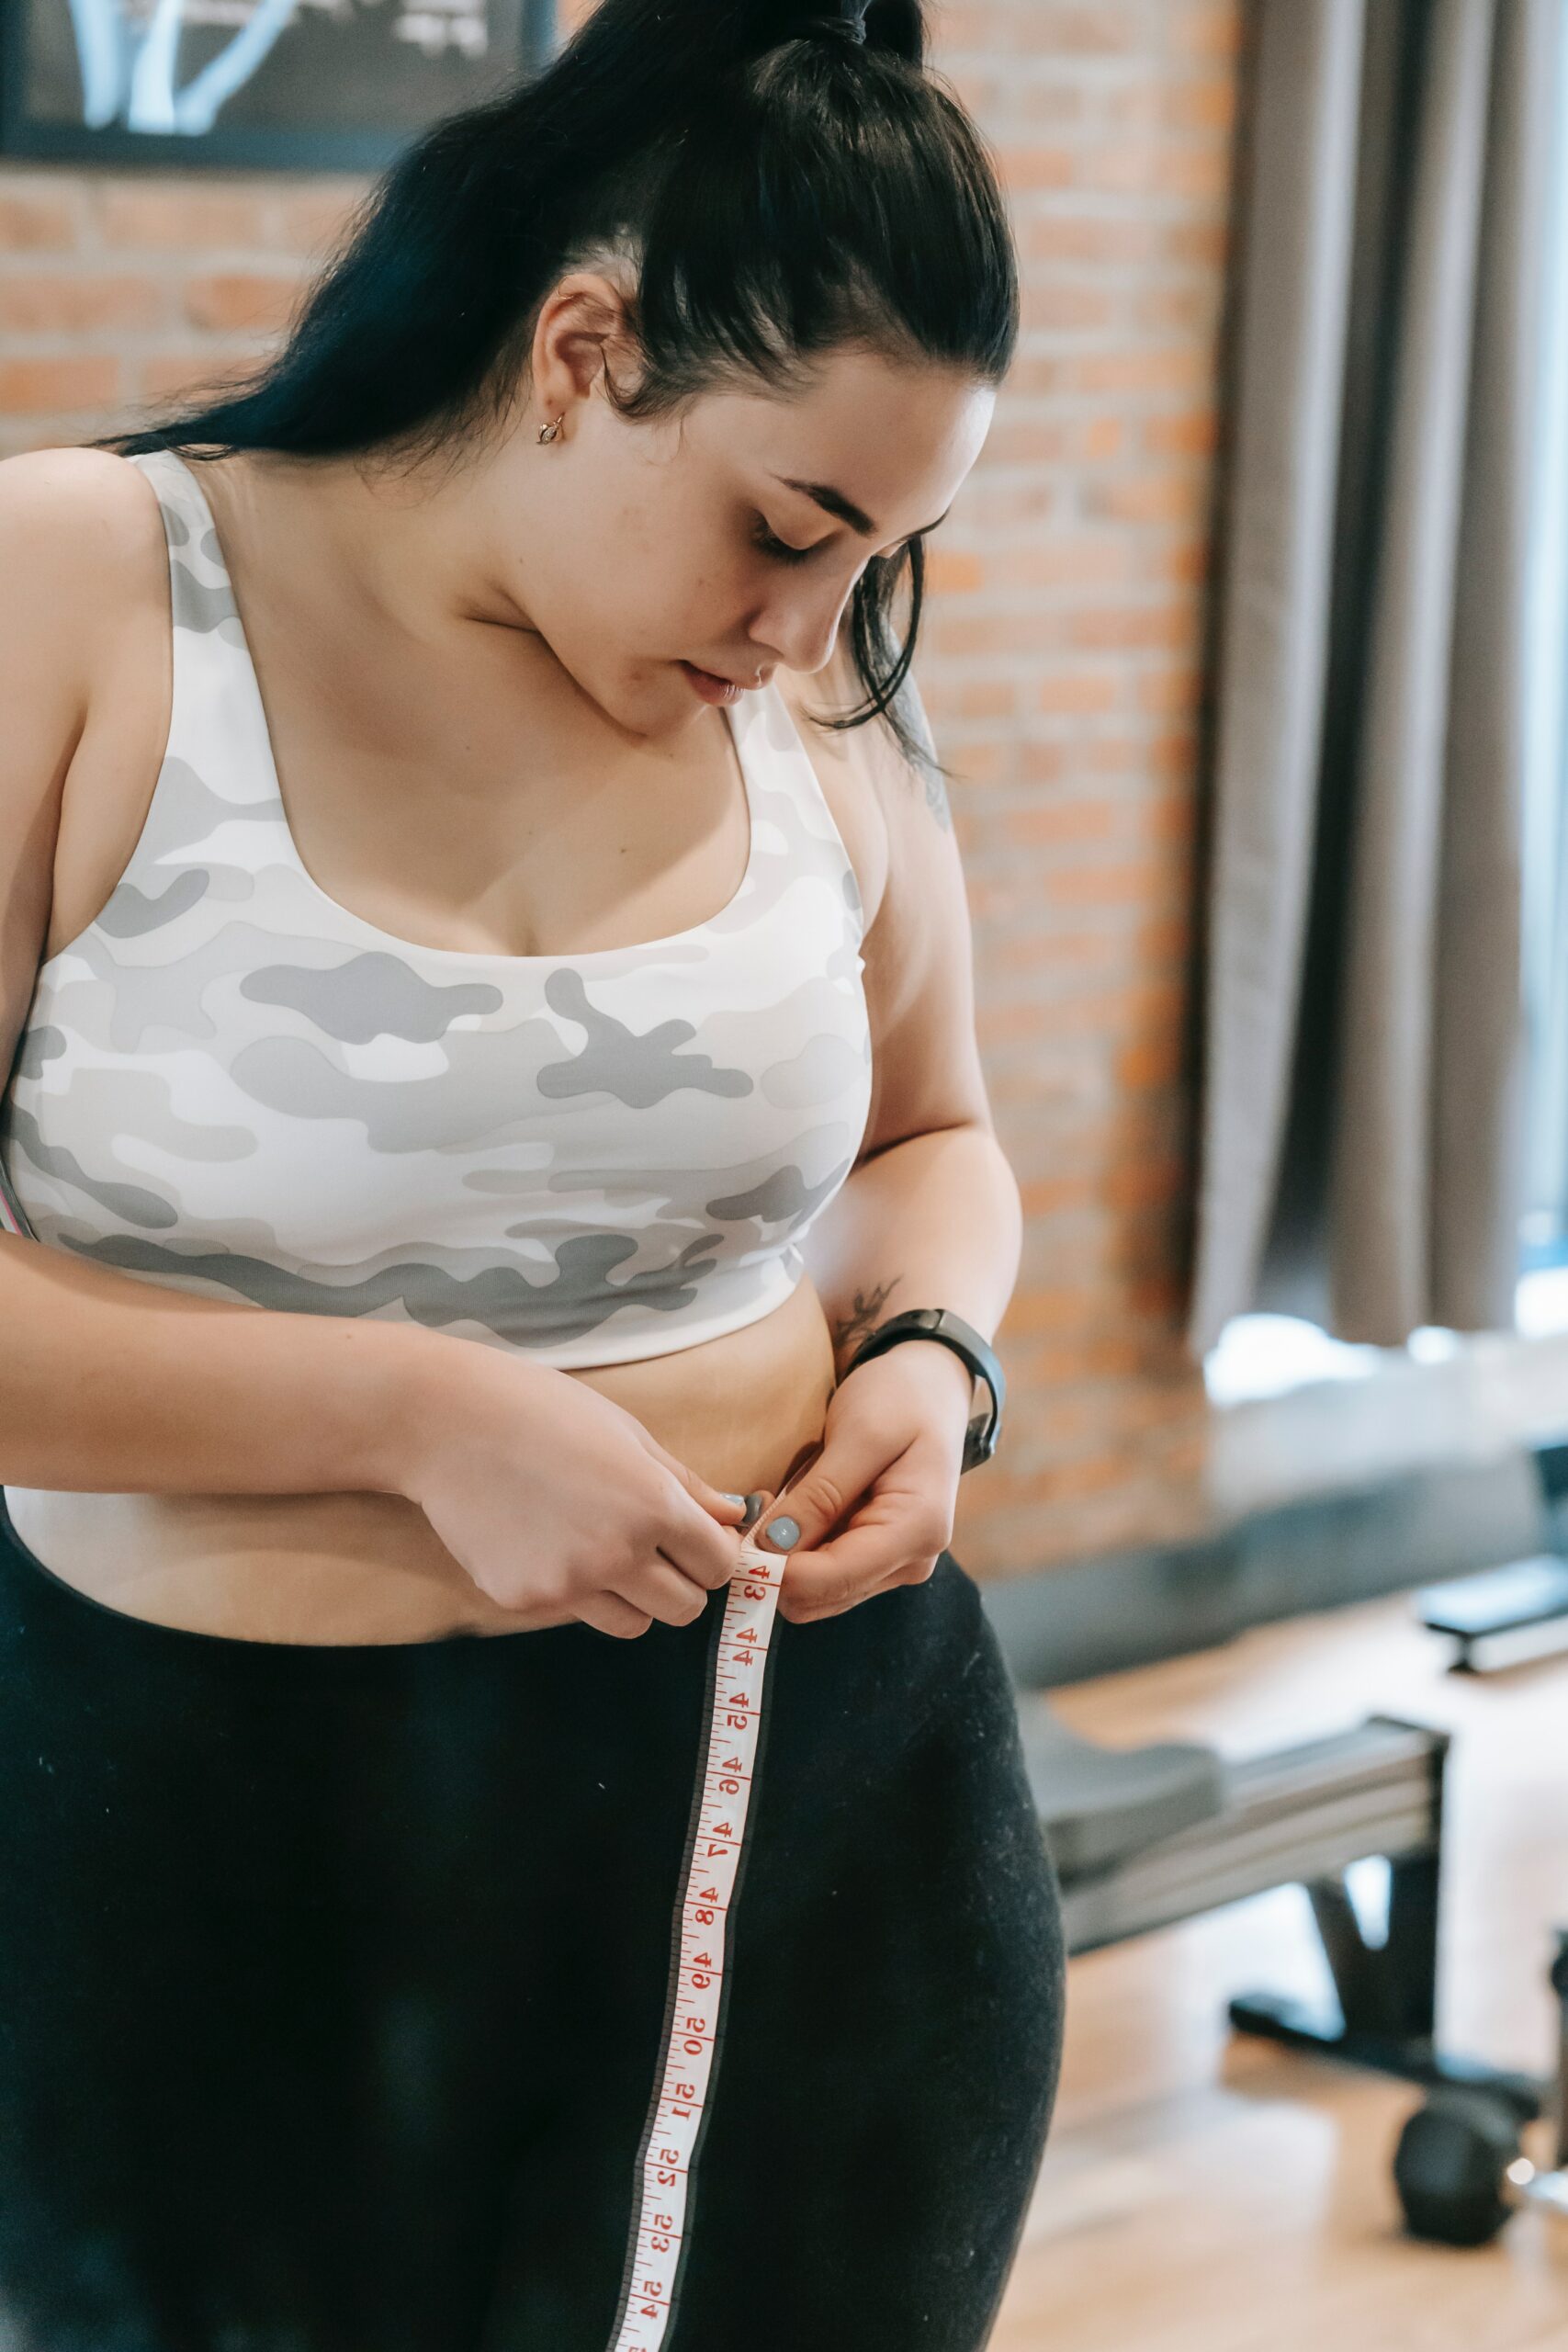 Woman measuring her waist post-workout